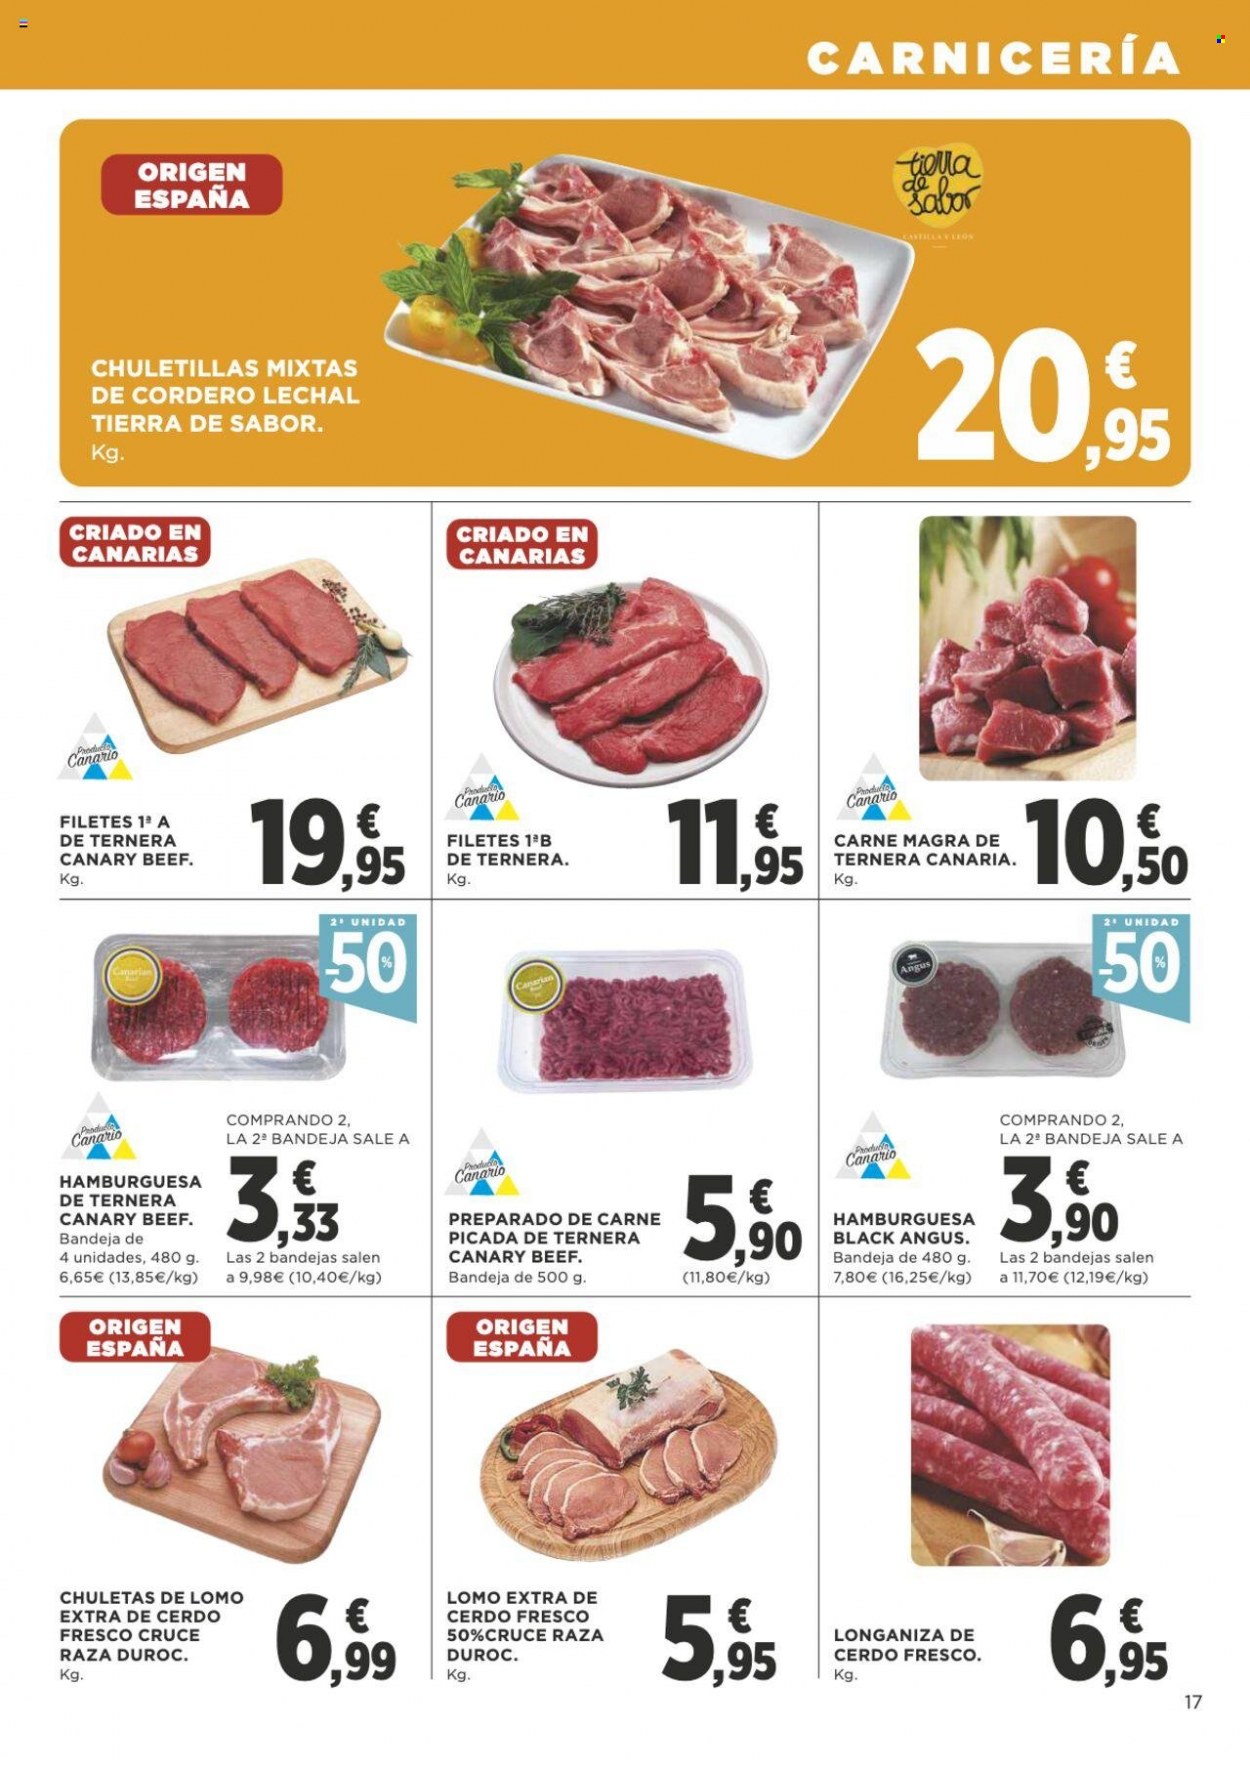 thumbnail - Folleto actual Supercor supermercados - 19/05/22 - 01/06/22 - Ventas - chuleta, lomo, angus, carne de ternera, hamburguesa, carne picada, cordero lechal. Página 17.